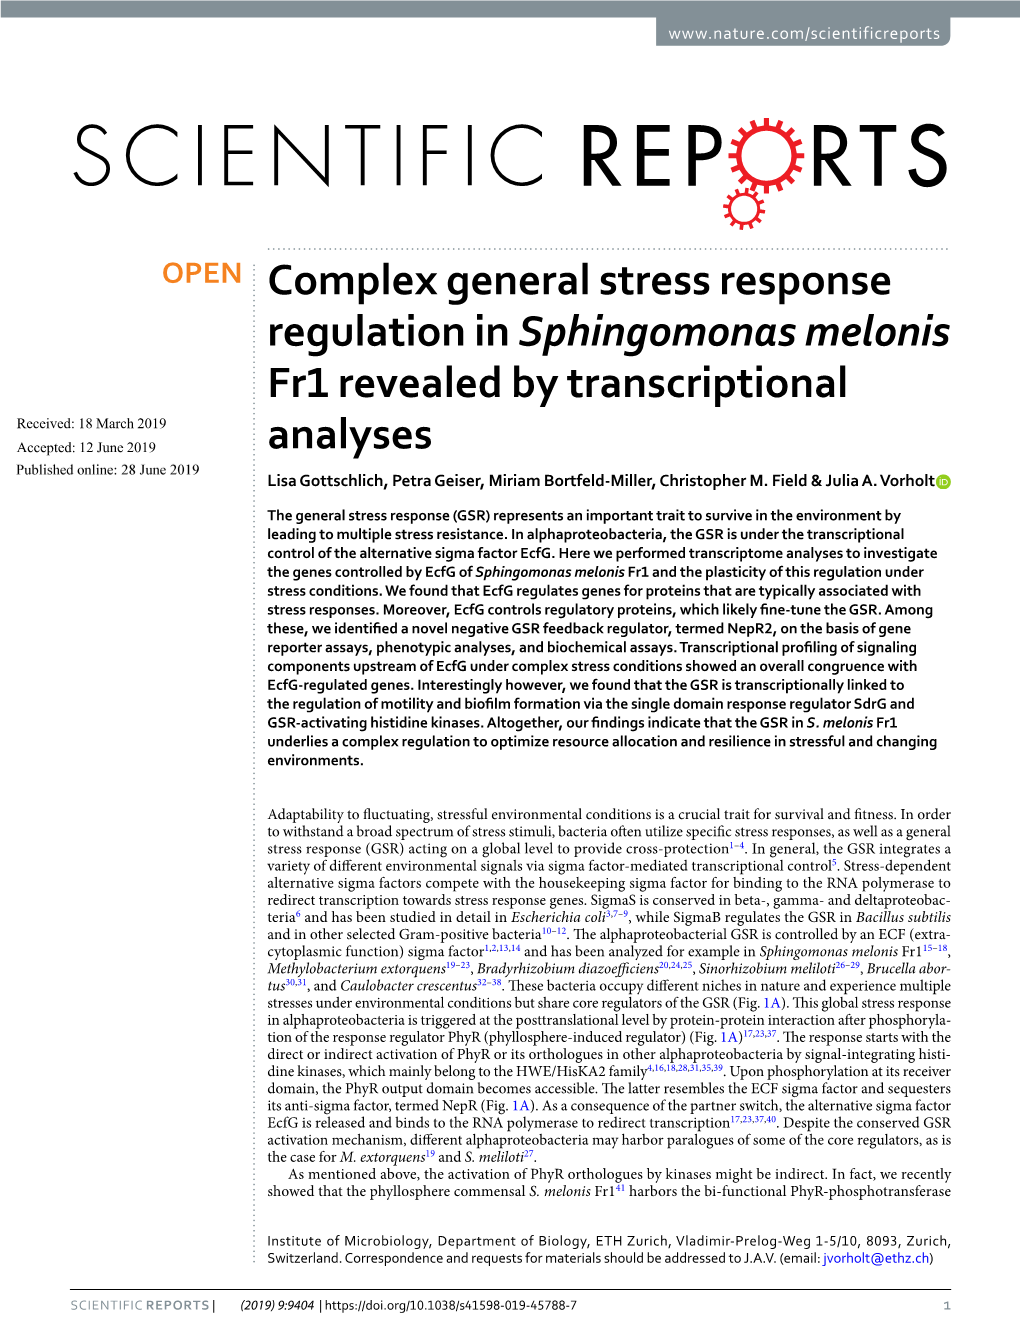 Complex General Stress Response Regulation in Sphingomonas